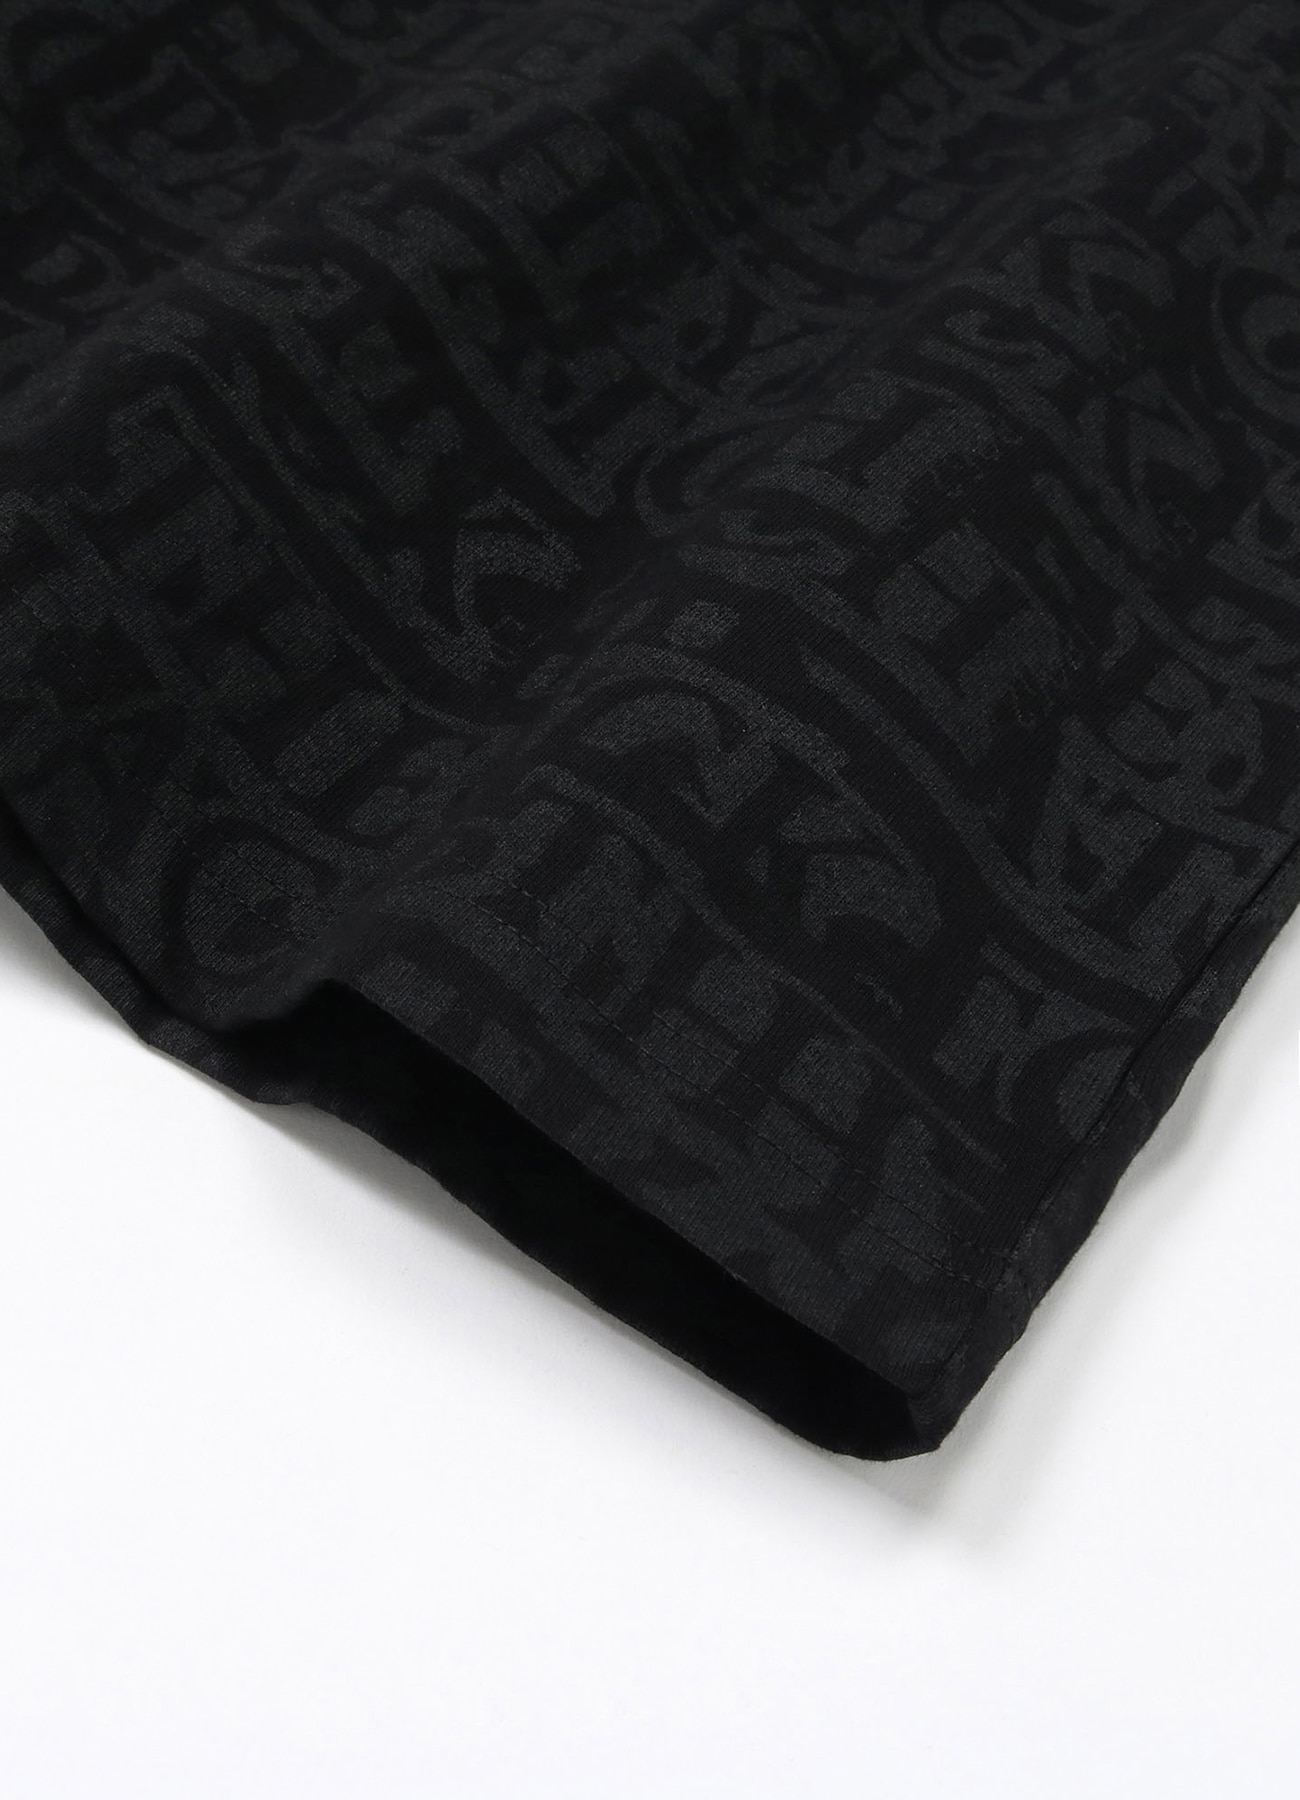 WILDSIDE × BlackEyePatch NOIR EYE PATCH Long Sleeve T-shirt(M 